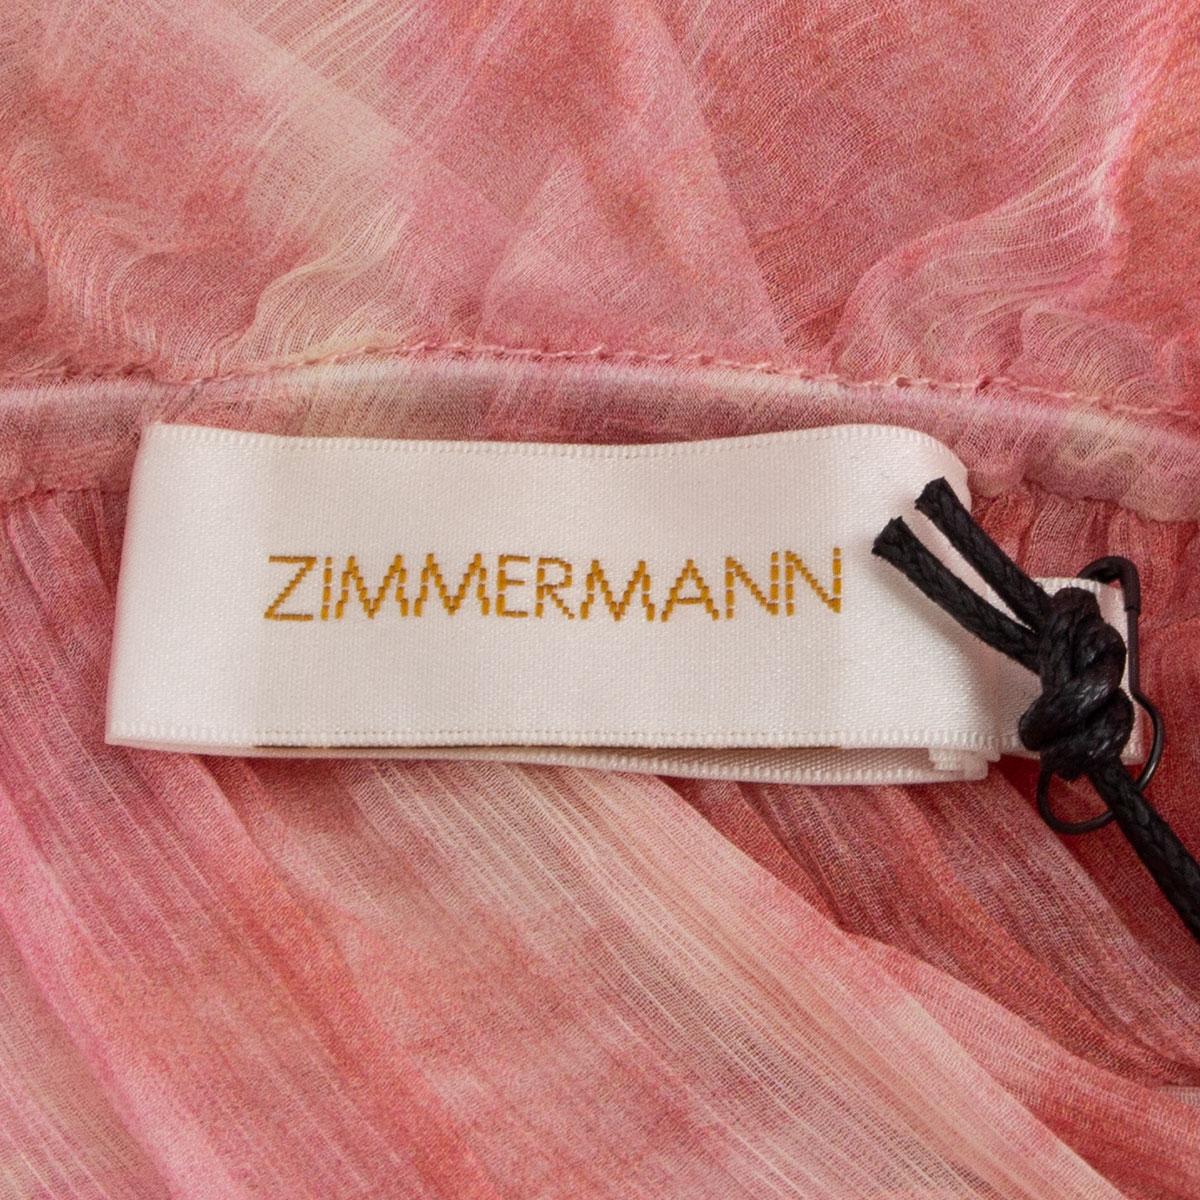 zimmerman pink dress